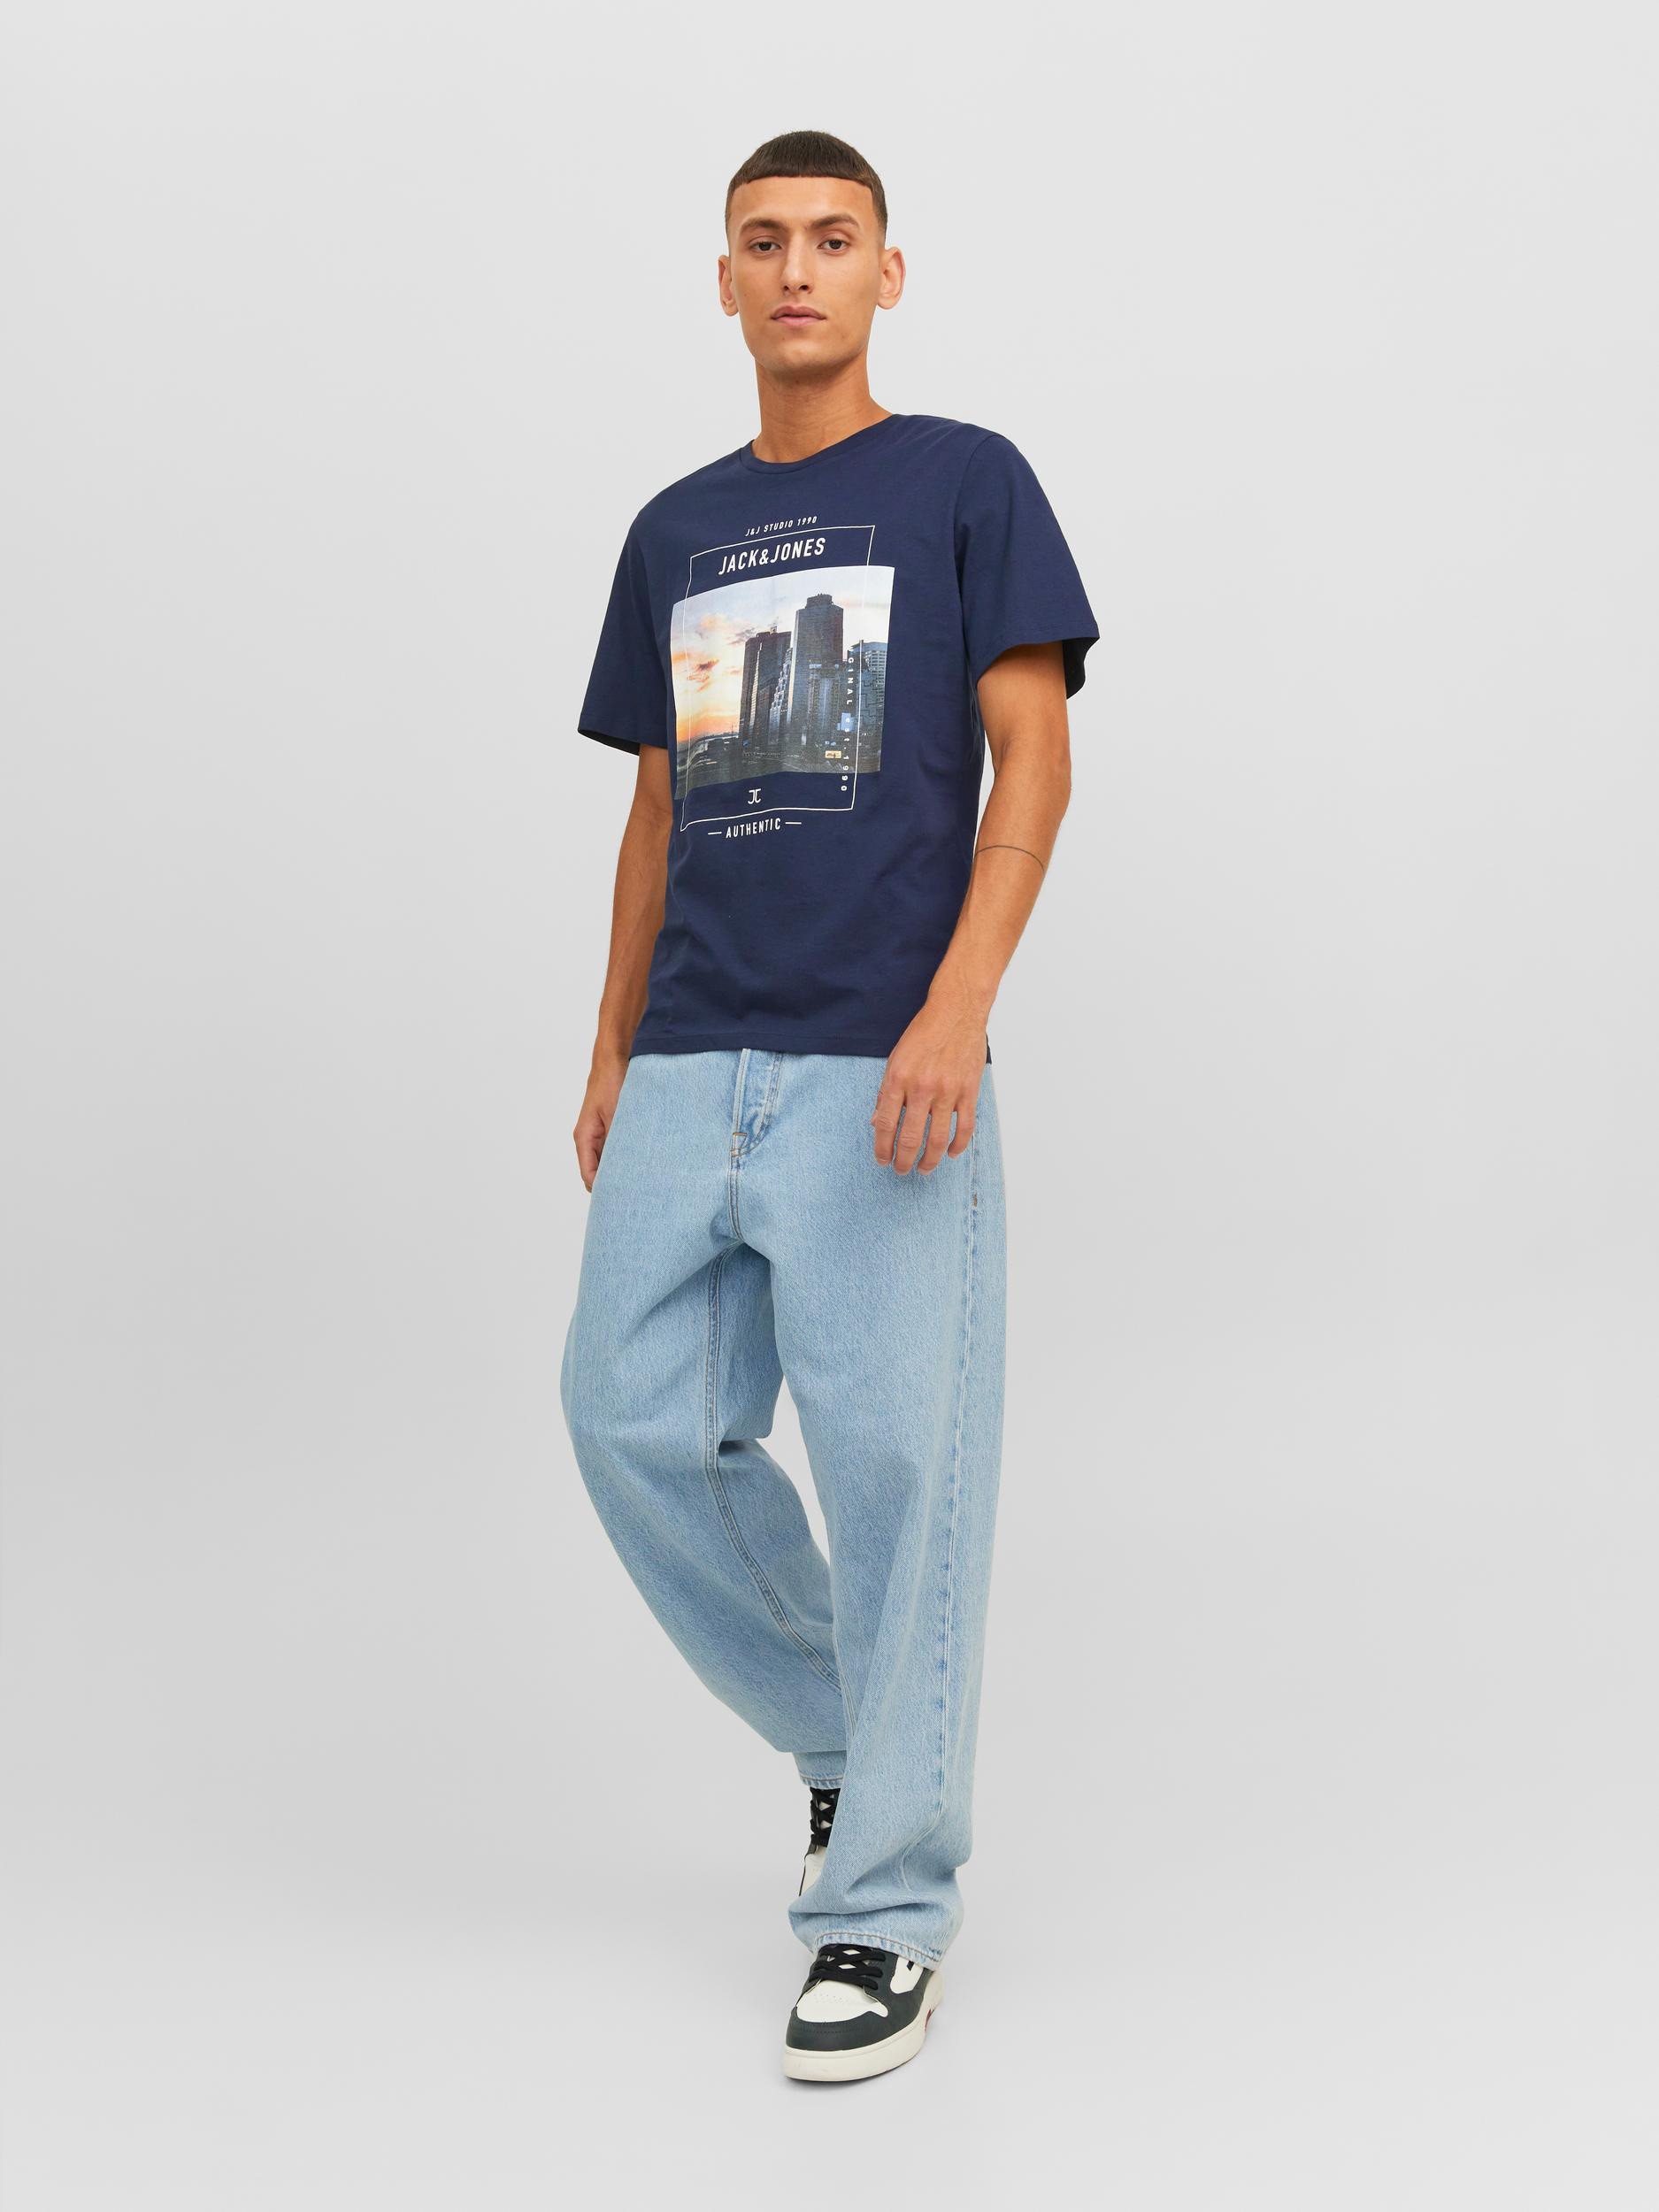 Jack & Jones -Cotton T-shirt with print, Dark Blue, large image number 1